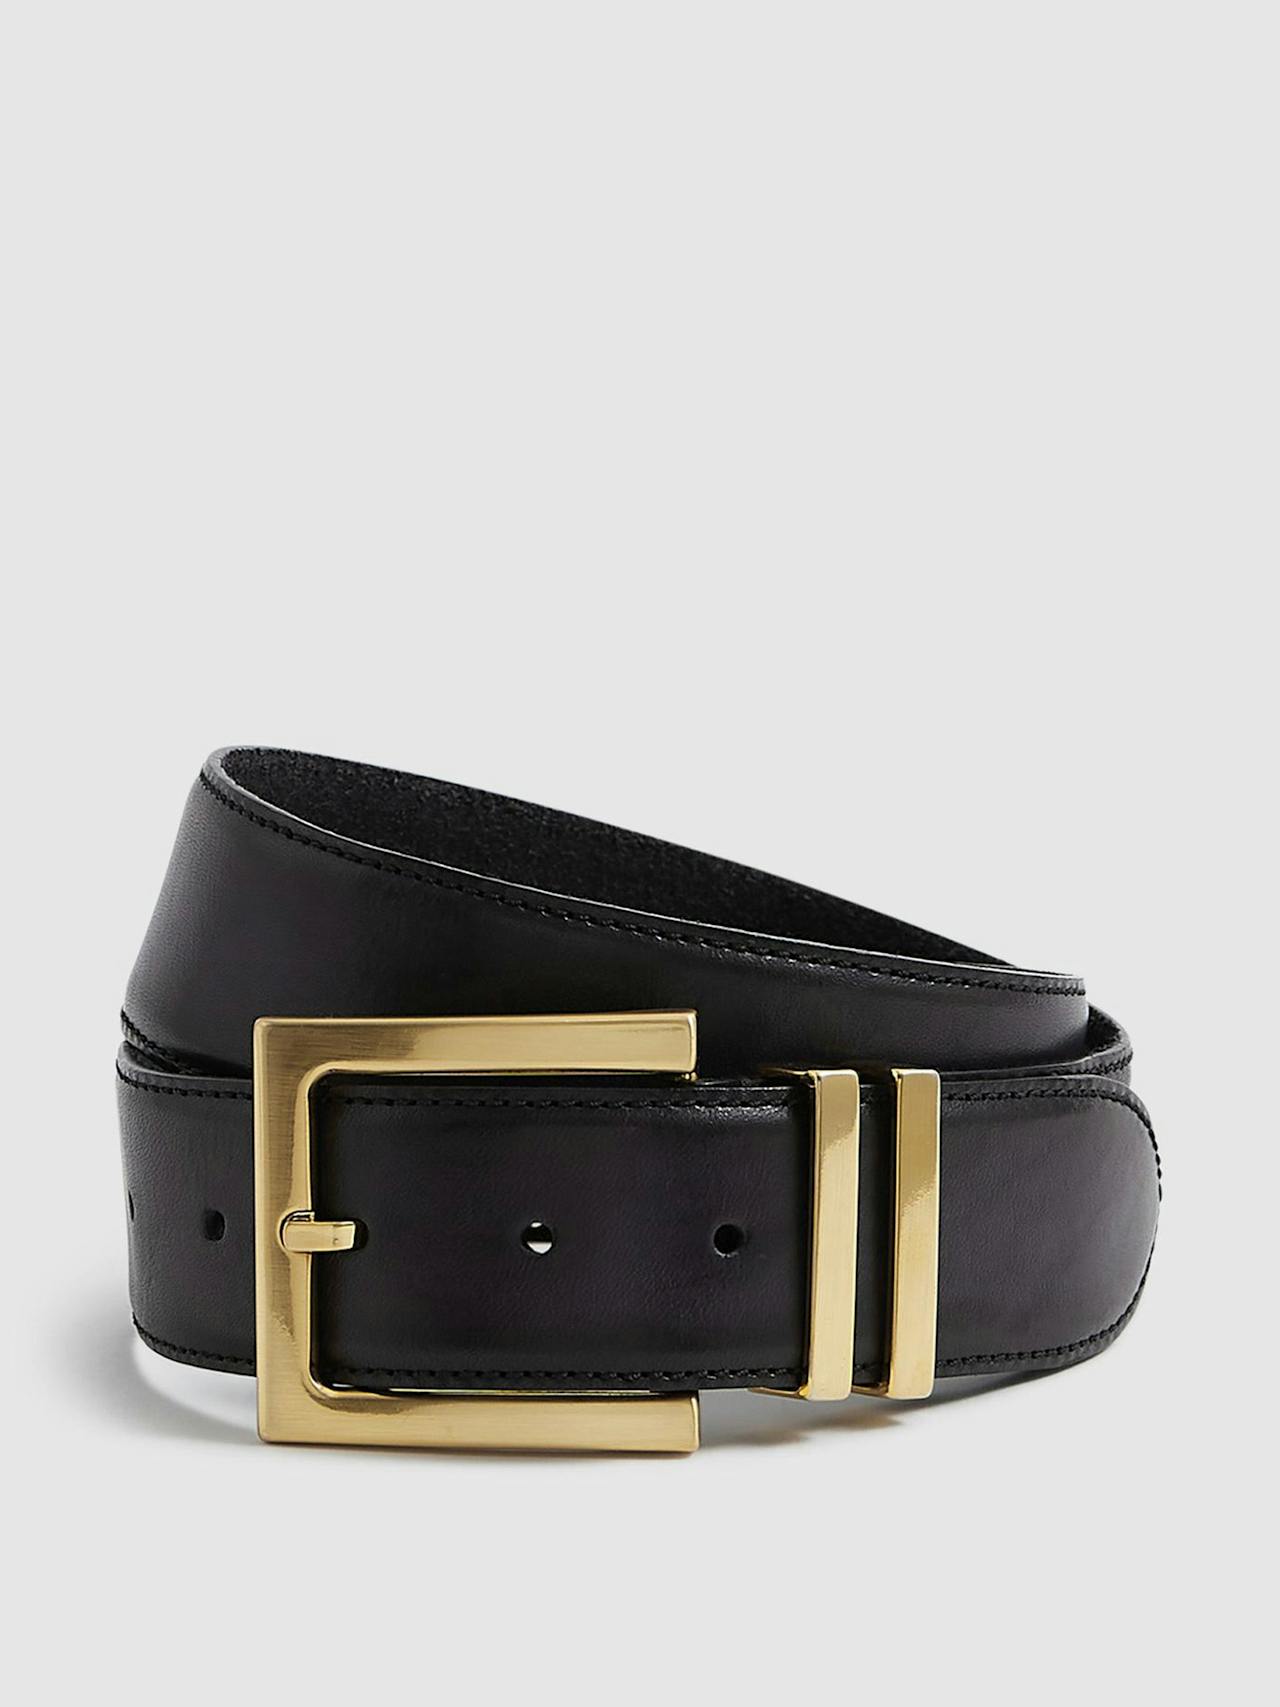 Brompton leather belt